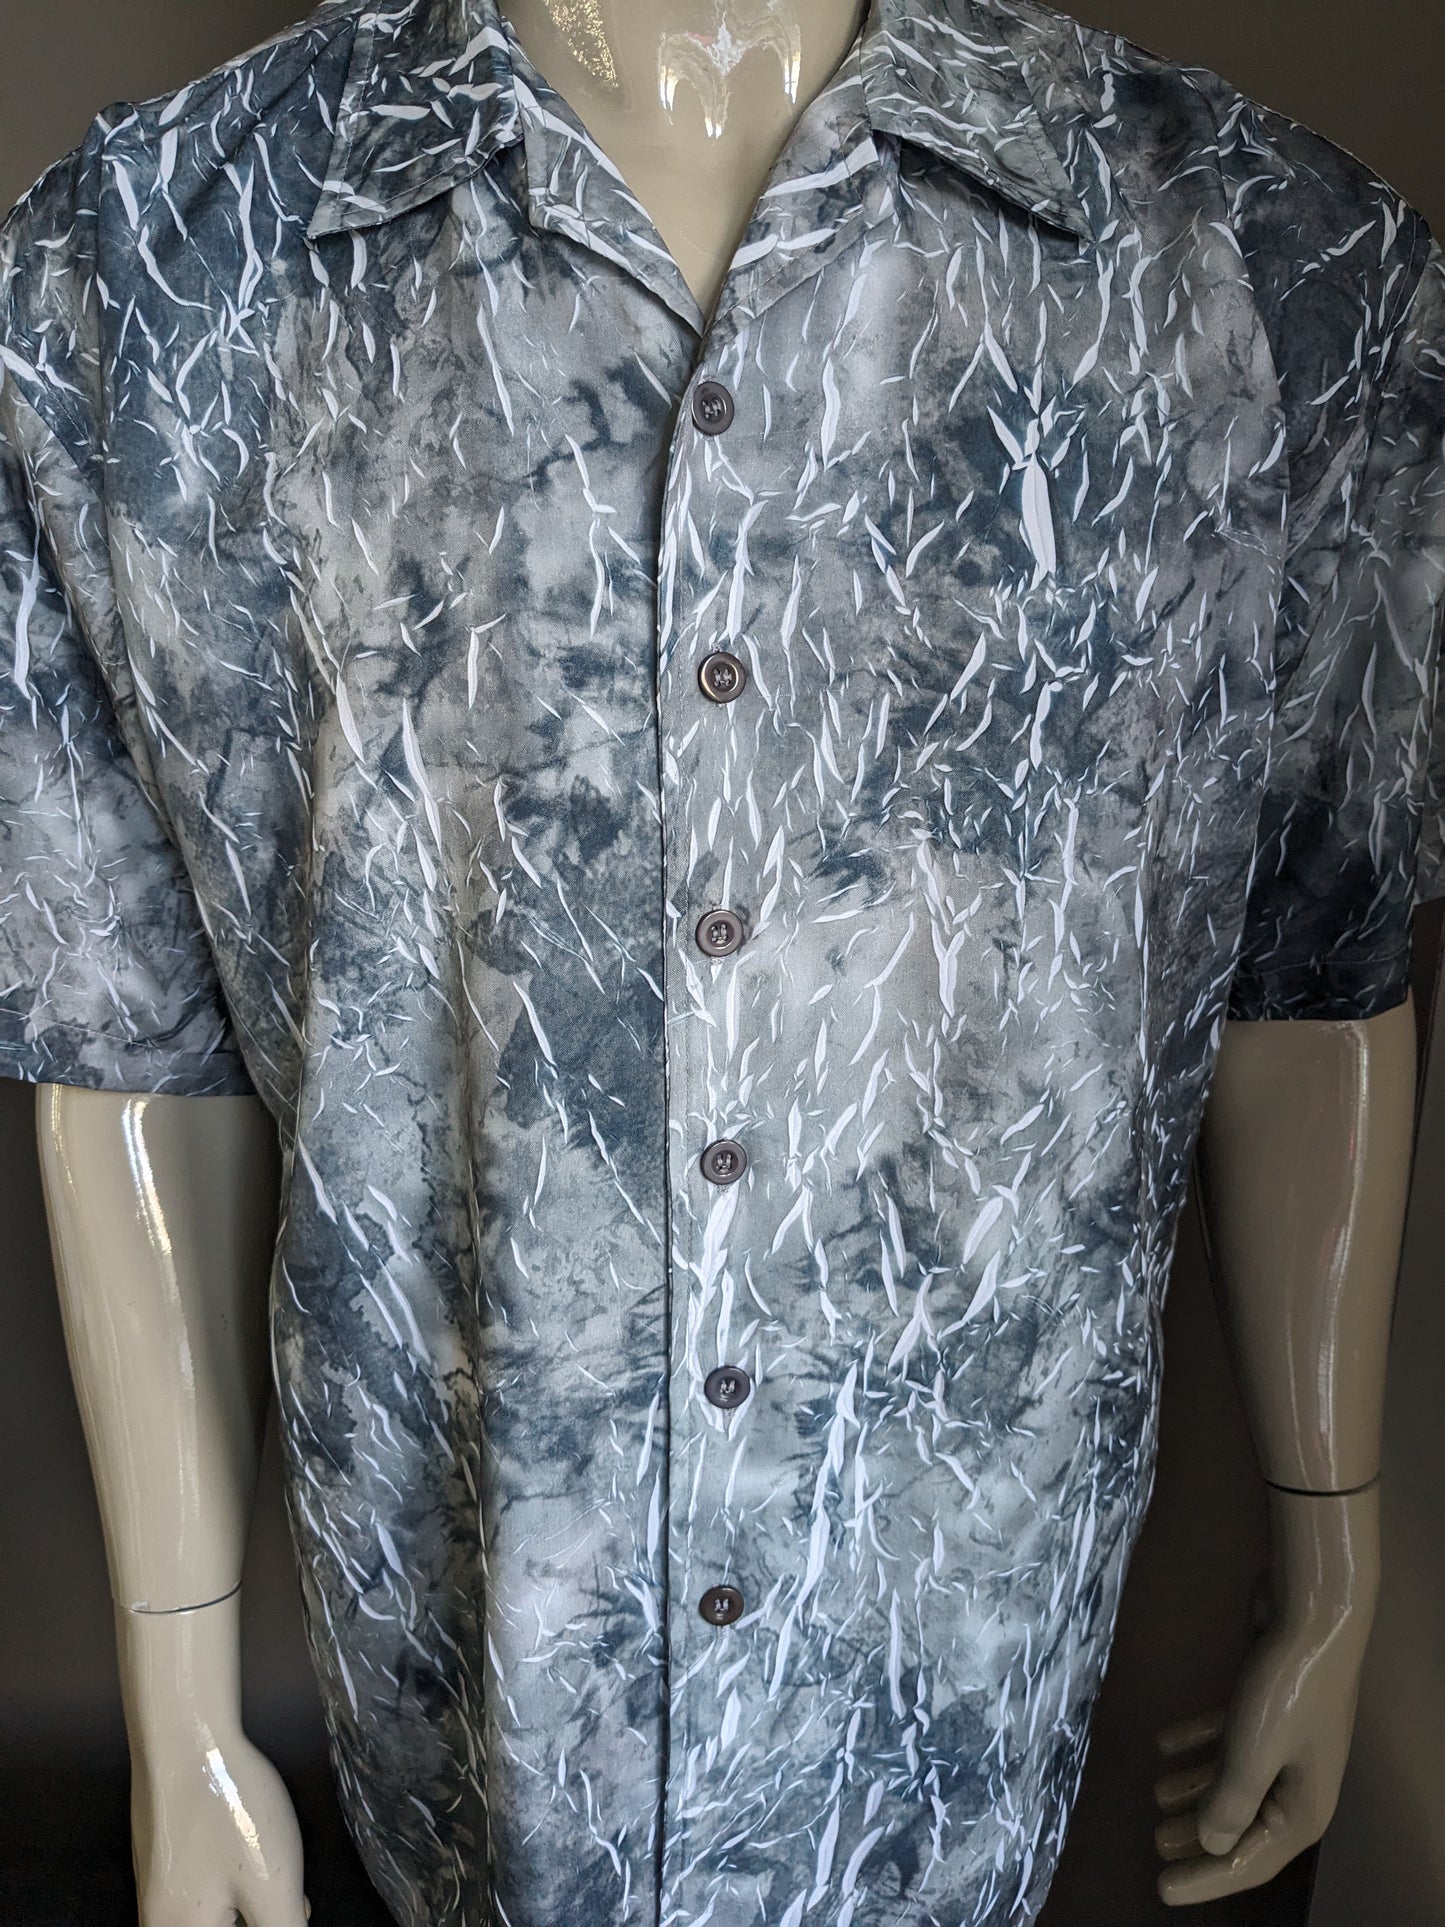 NE-I Camisa vintage manga corta. Efecto de arrugas blancas grises. Tamaño XL / XXL-2XL.